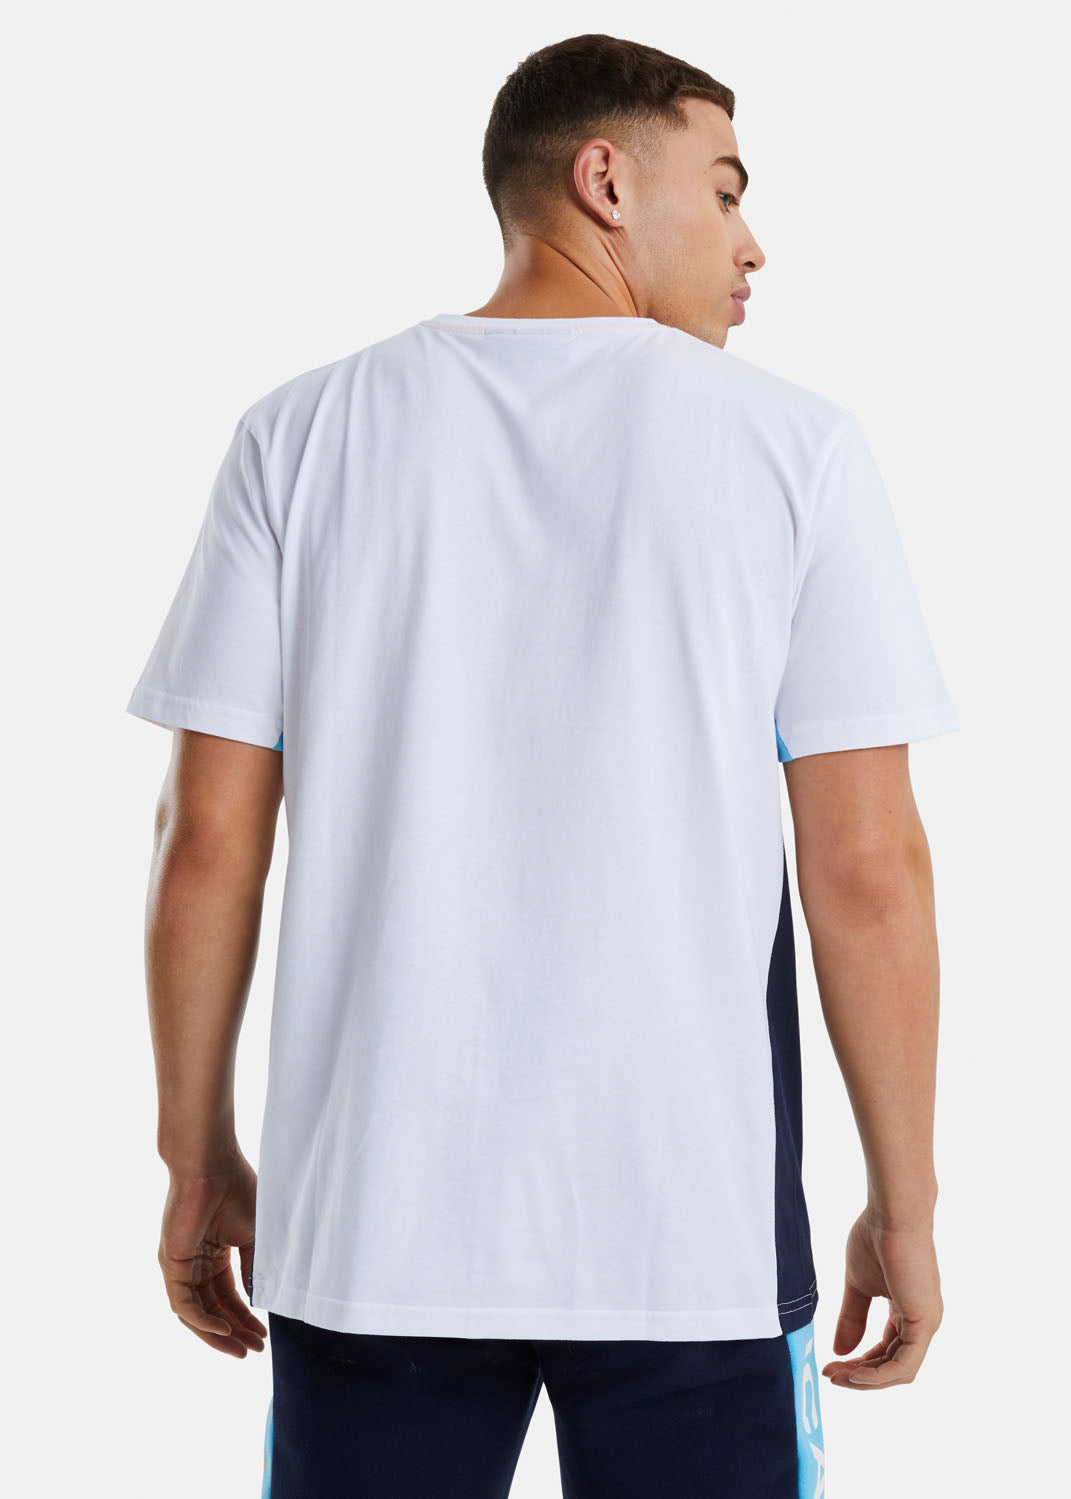 The Pooler T-Shirt